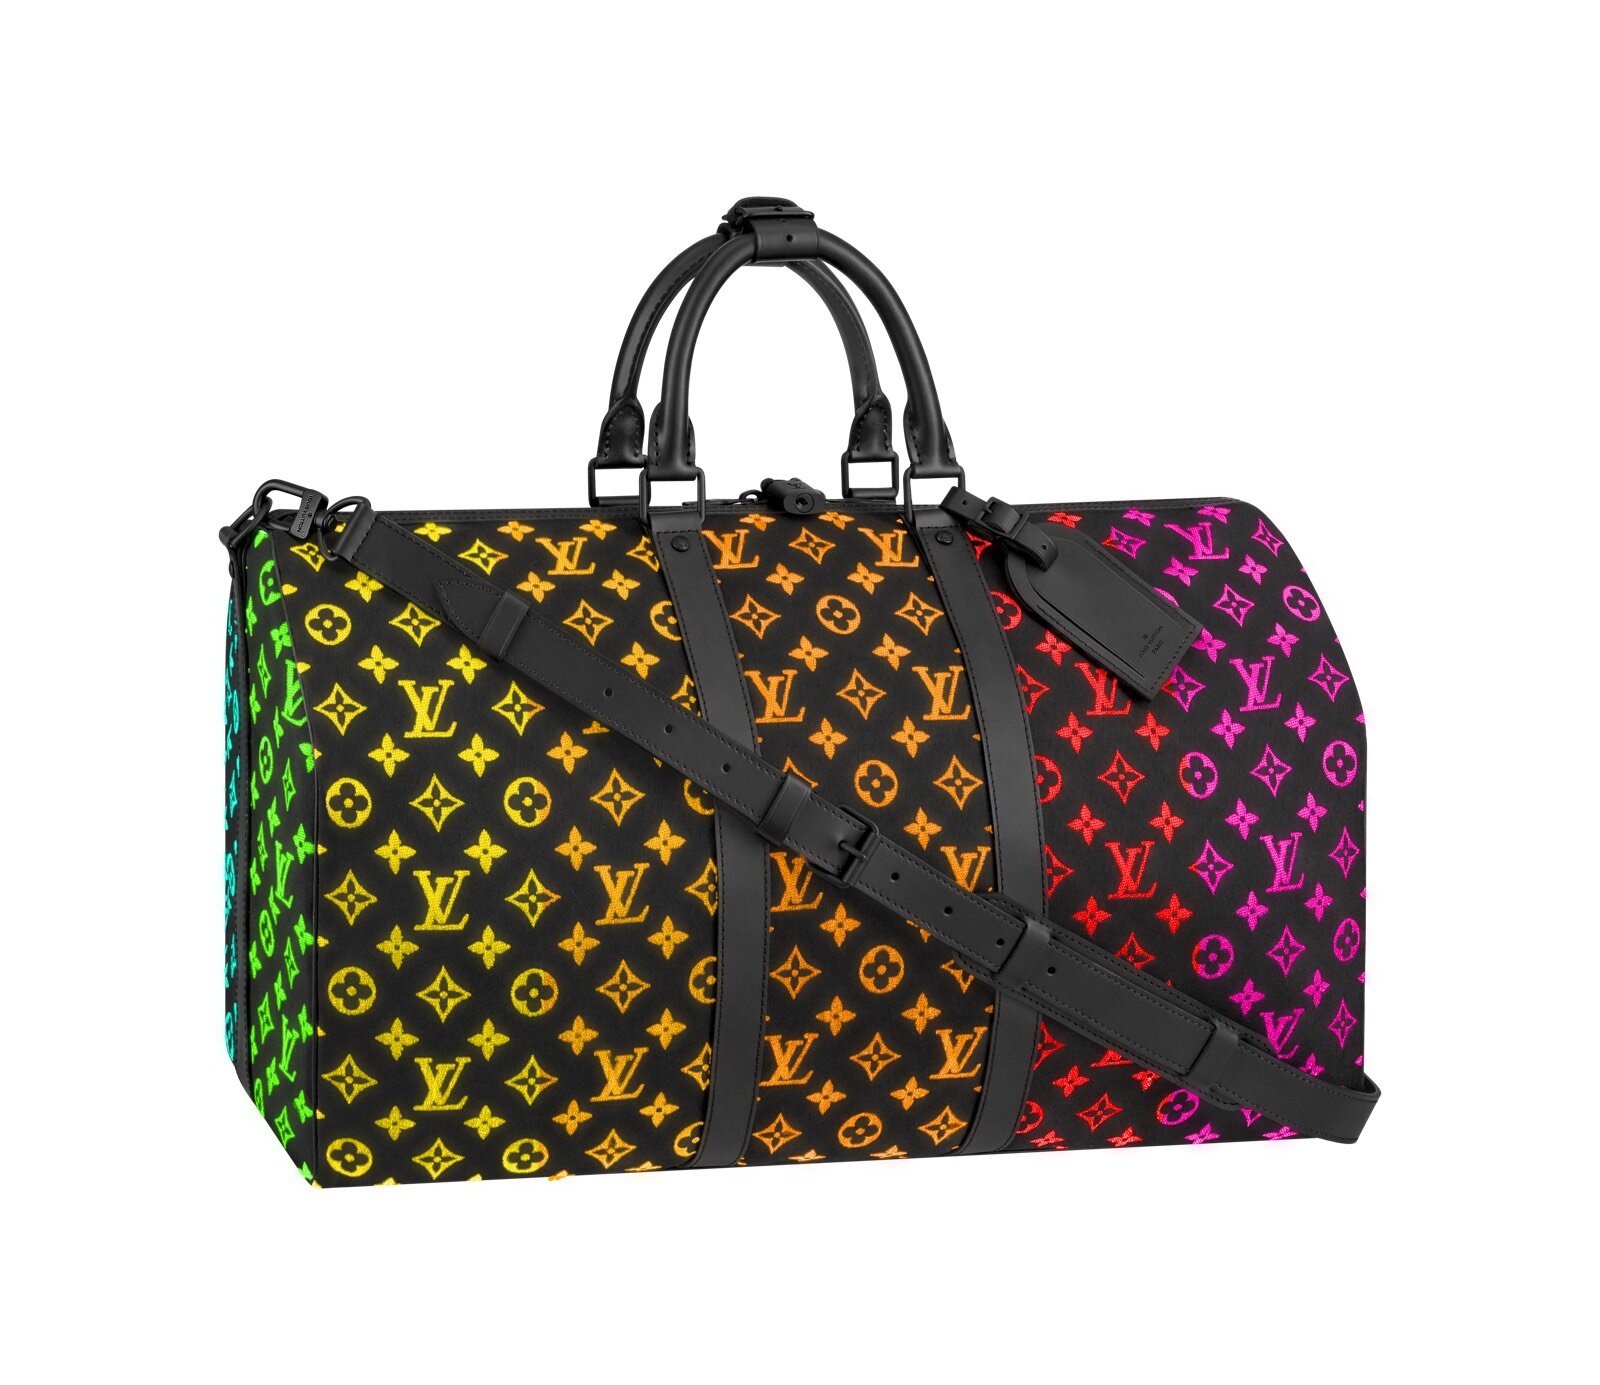 Louis Vuitton Cruise 2021 Bags & Accessories